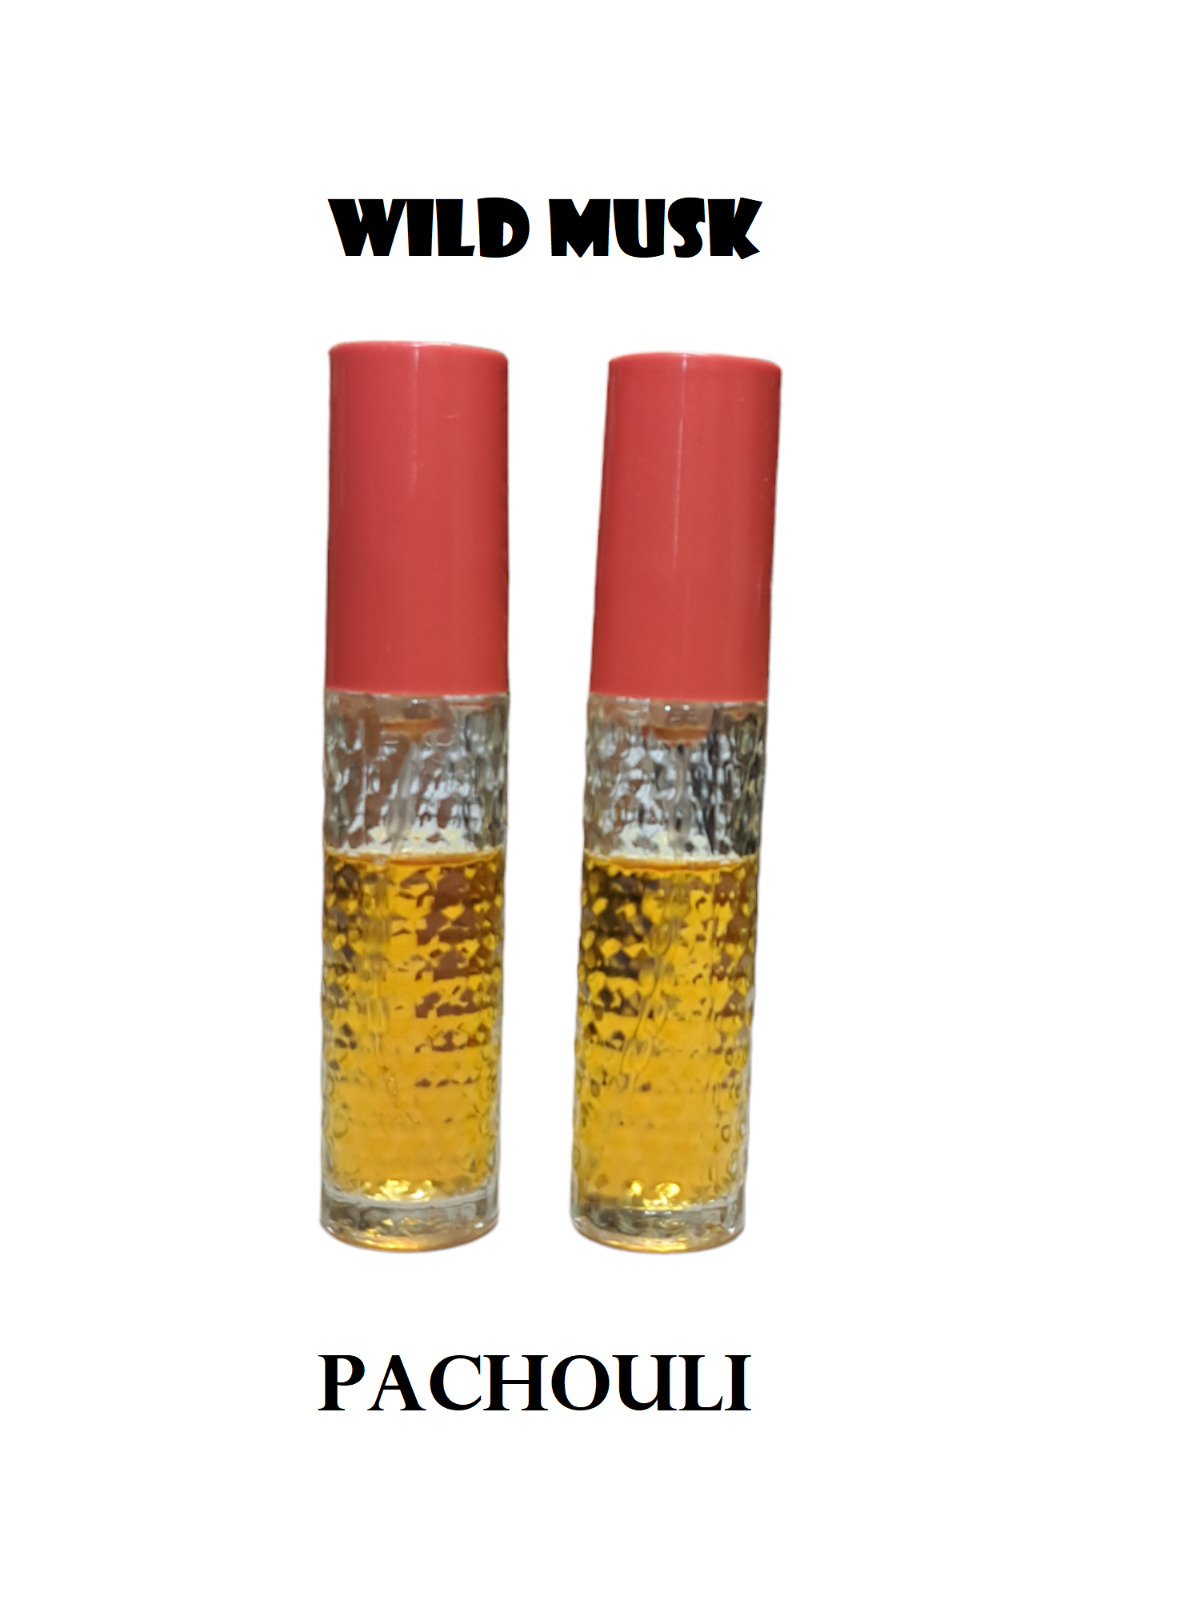 Wild Musk Pachouli Blend Cologne Spray by Coty .5 fl oz Lot Of 2